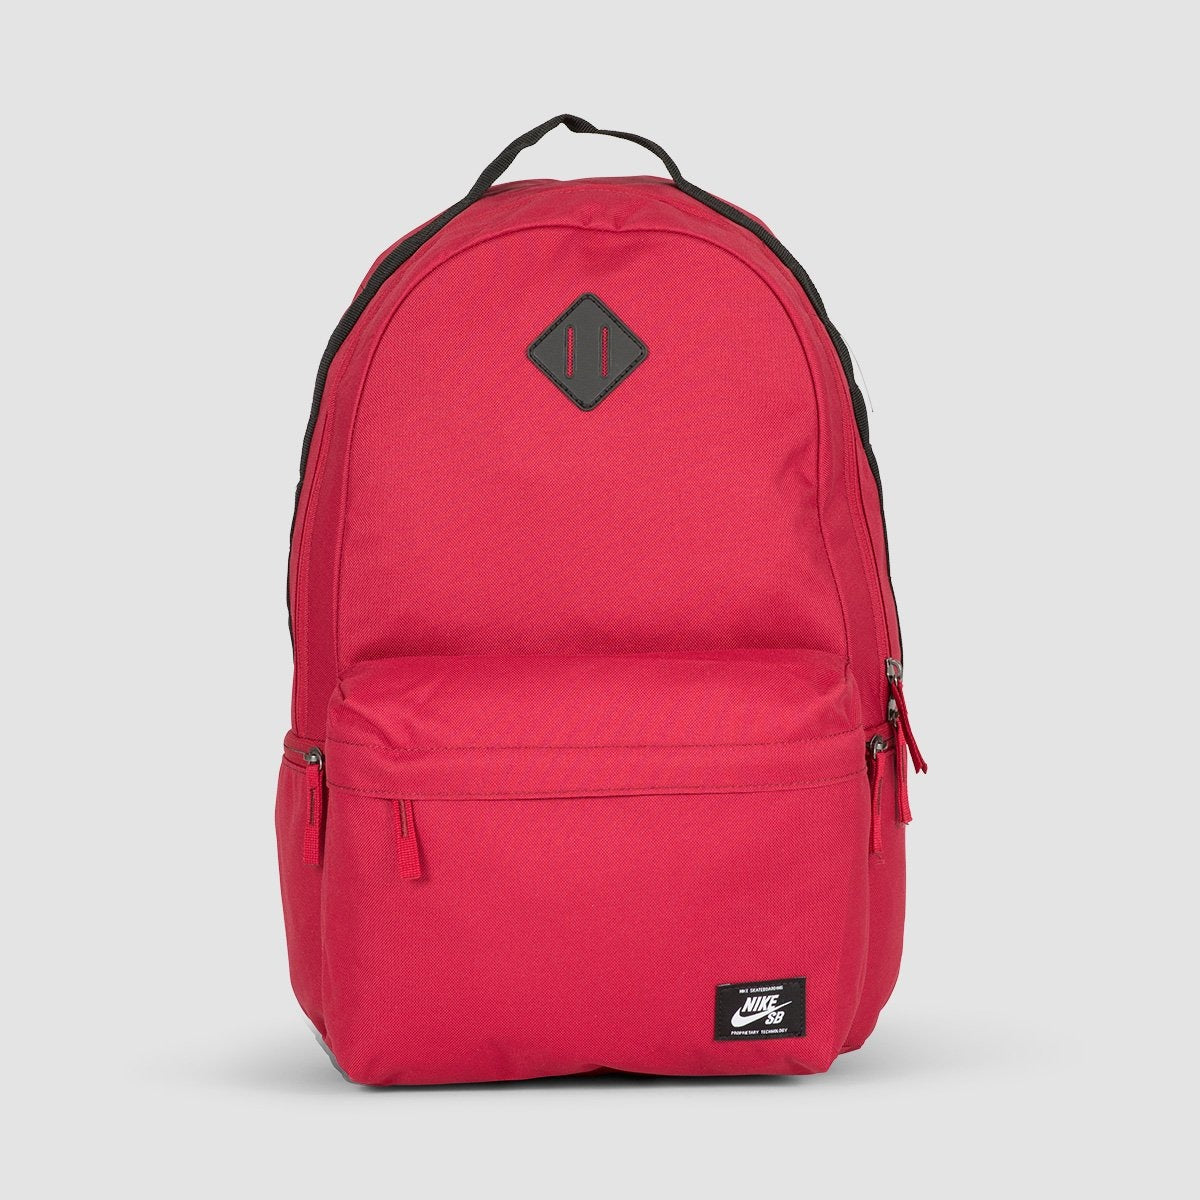 all red nike backpack